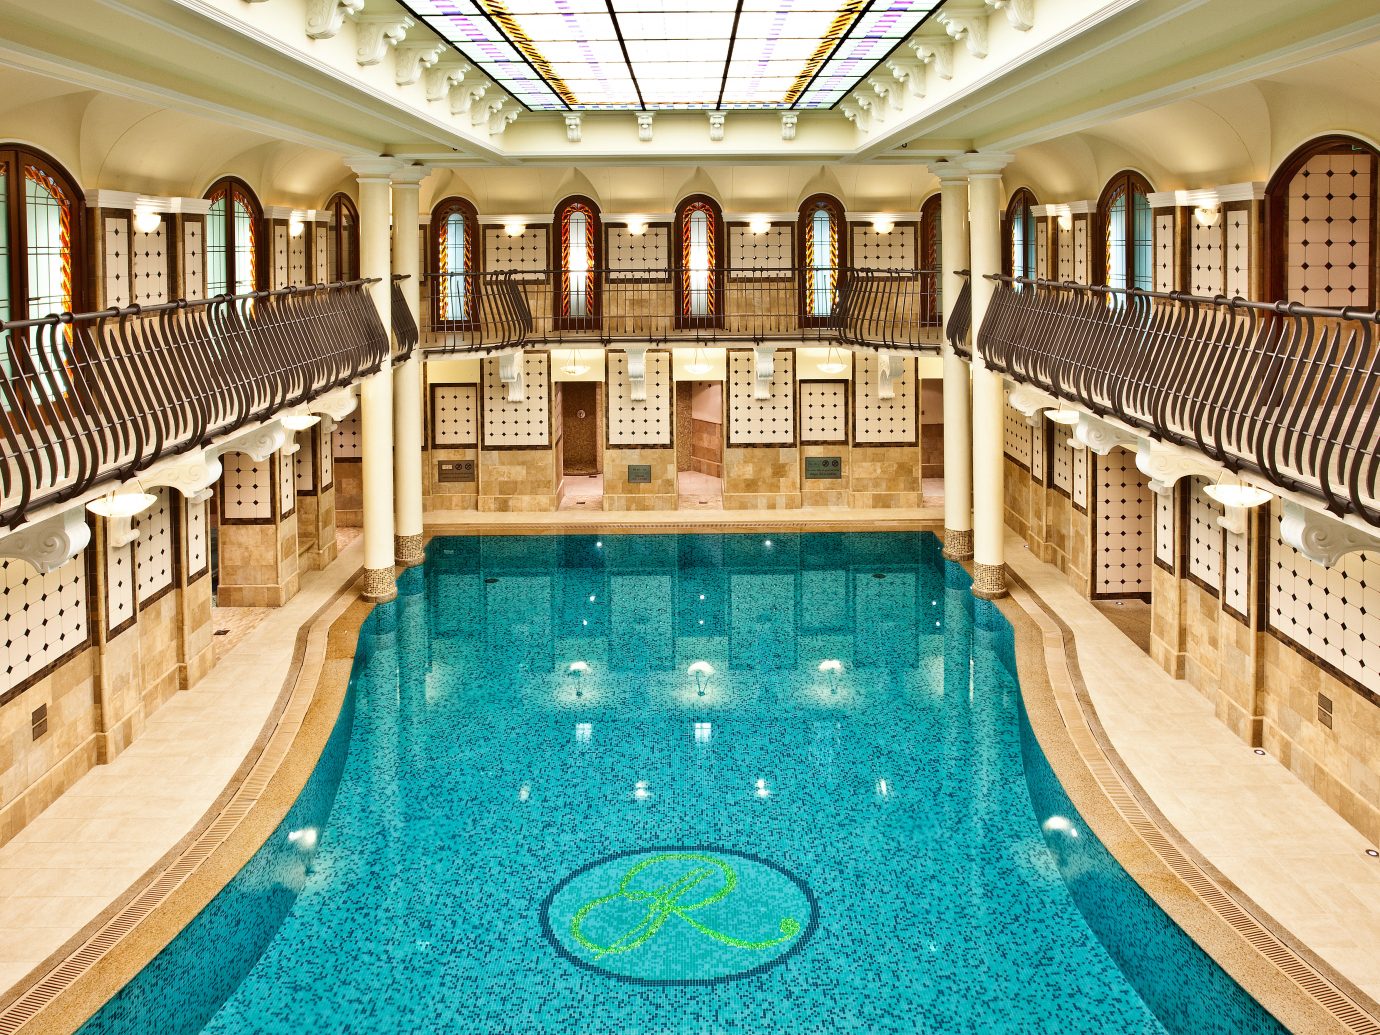 City Elegant Family Historic Luxury Pool Trip Ideas indoor floor ceiling swimming pool property estate leisure palace mansion Resort furniture